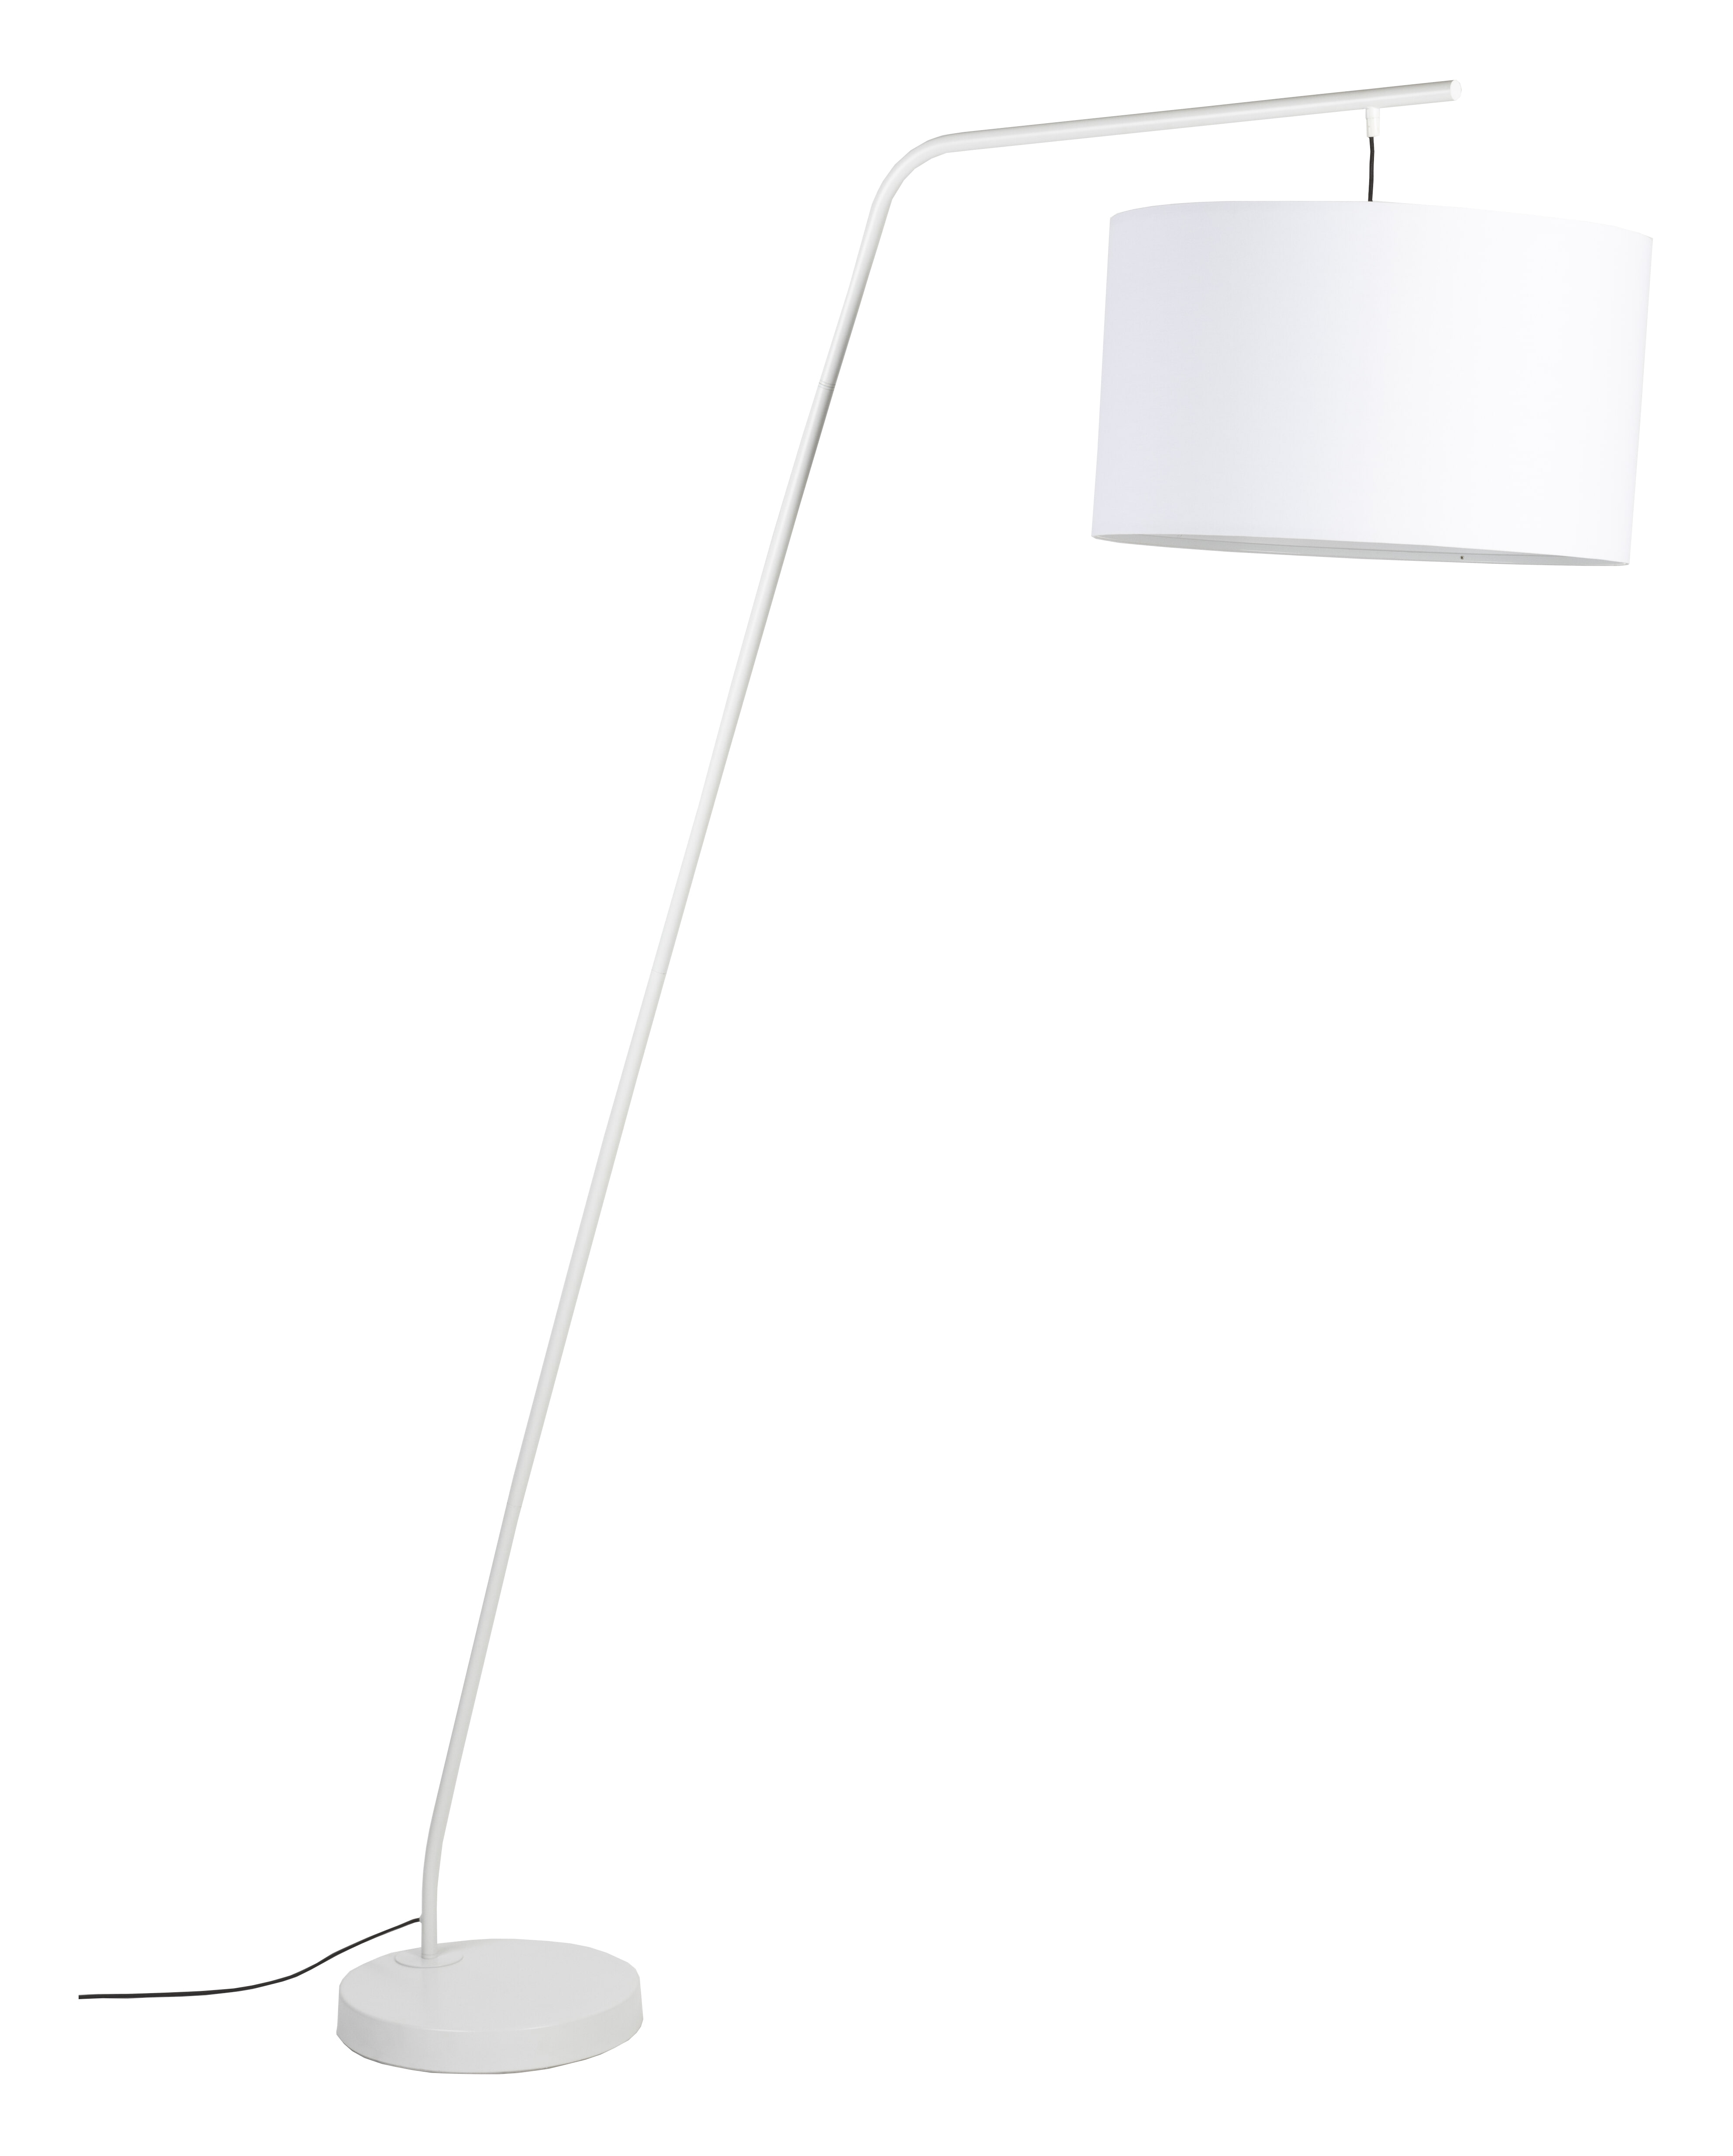 ZILT Vloerlamp Laniece 224cm hoog - Wit